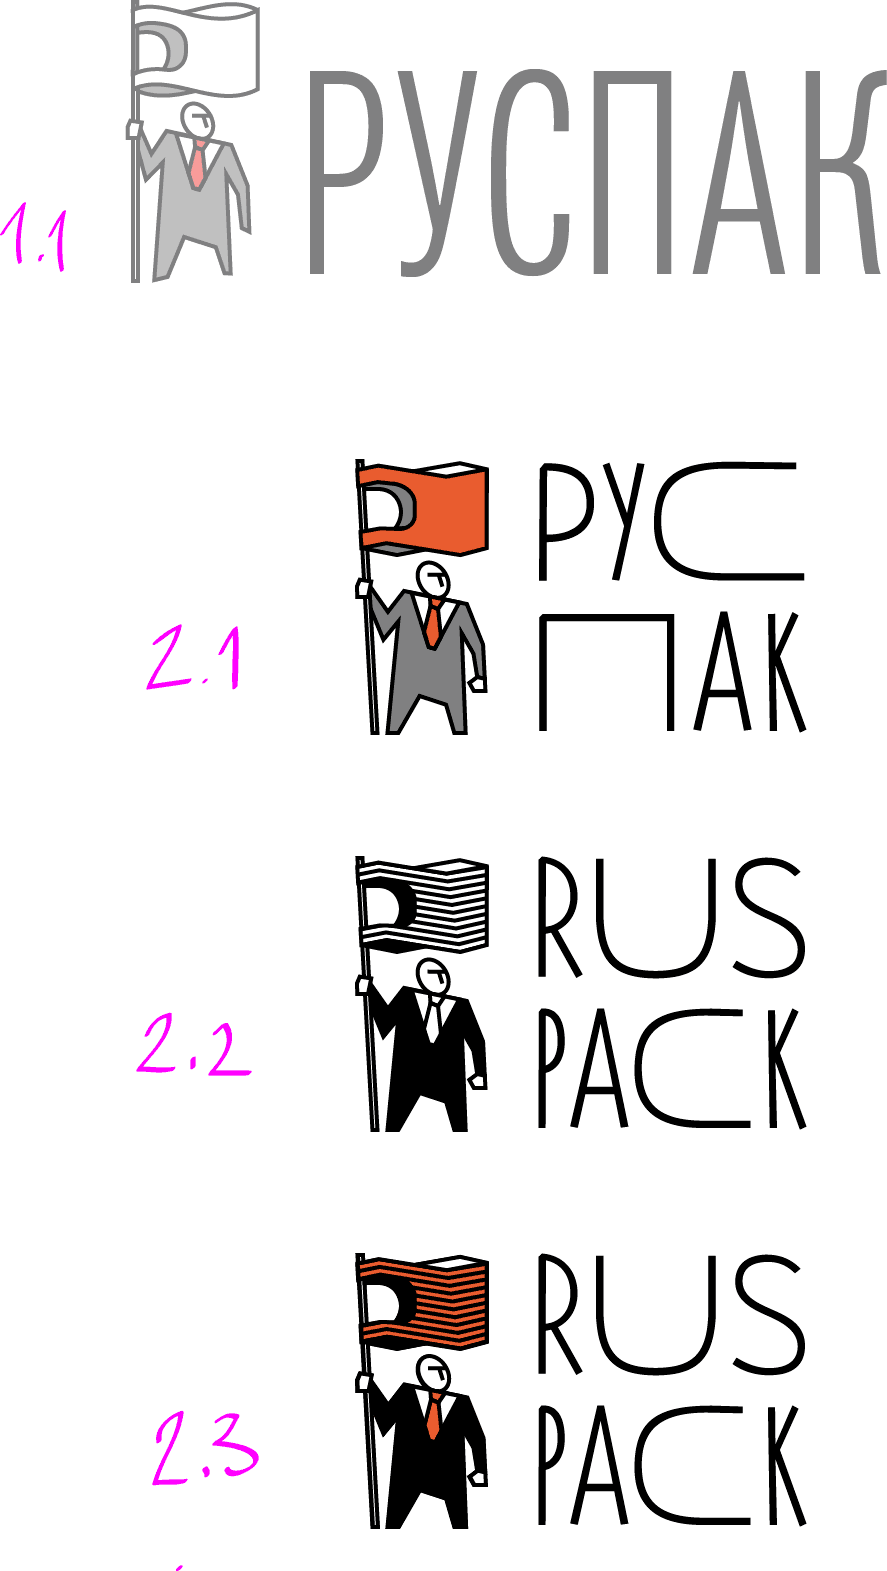 ruspack process 03